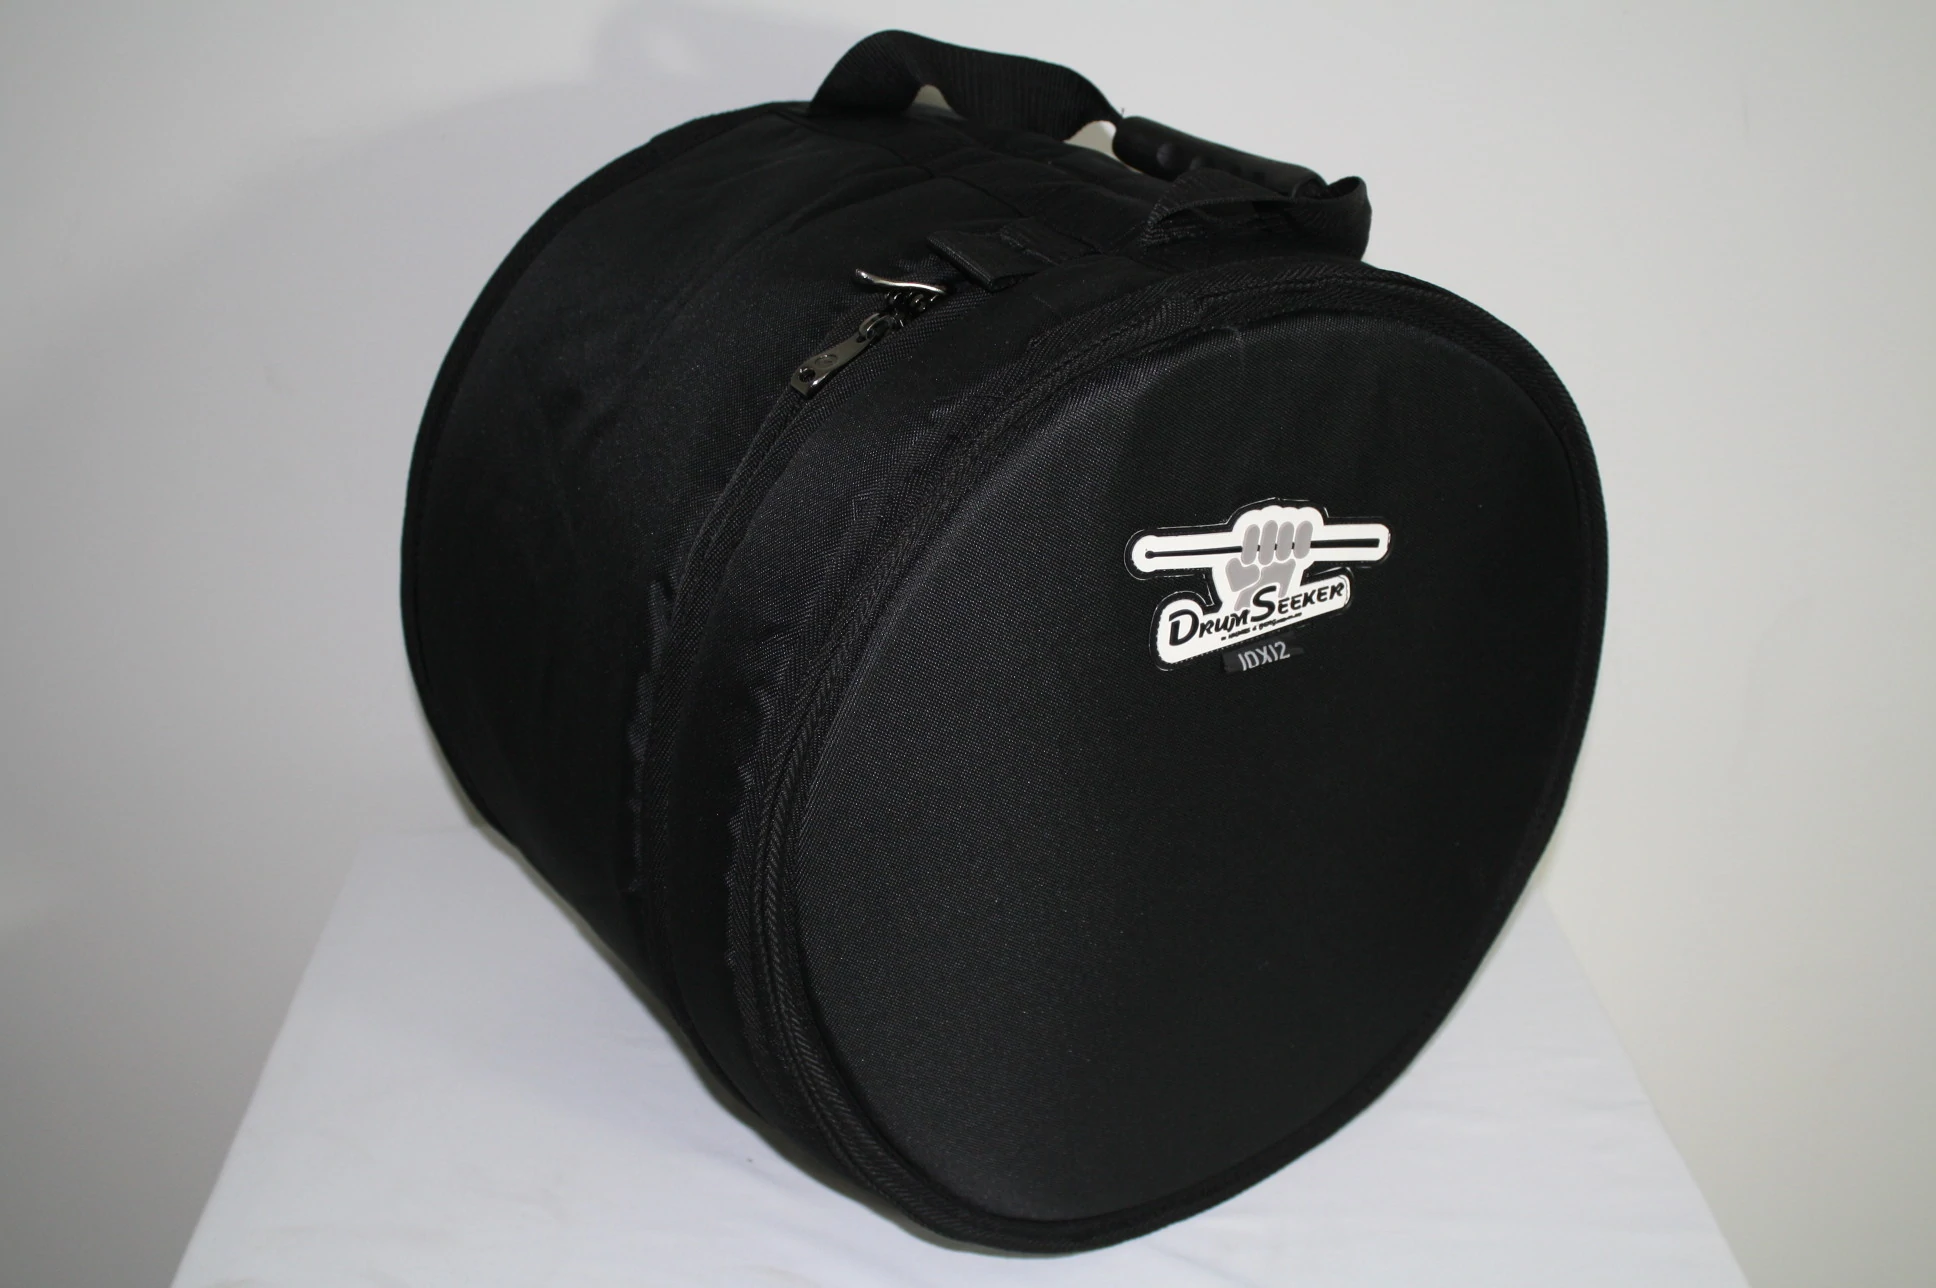 H&B Drum Seeker 10 x 12 Inches Tom Drum Bag